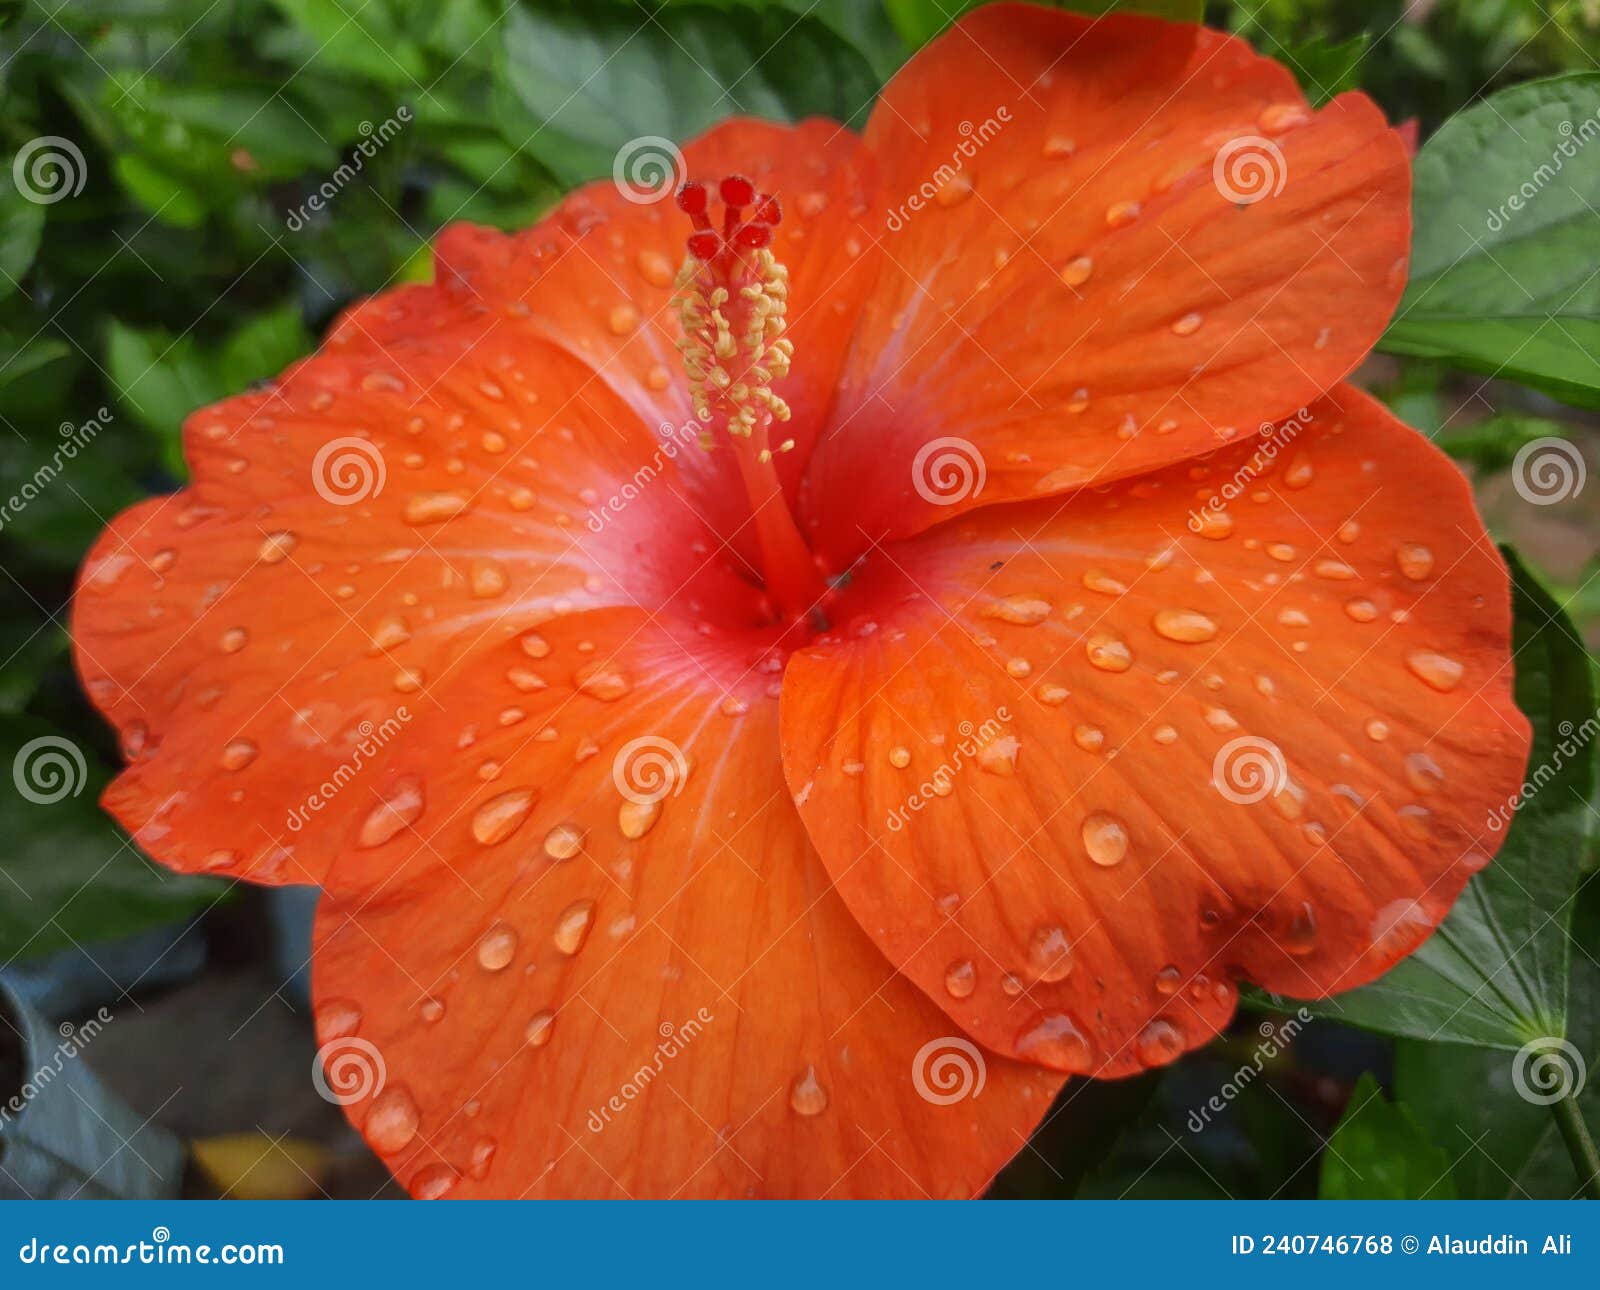 hibiscus rosa-sinensis flower, orange color hibiscus rosa-sinensis flower with dew drop,  dew on rose mallow flower.